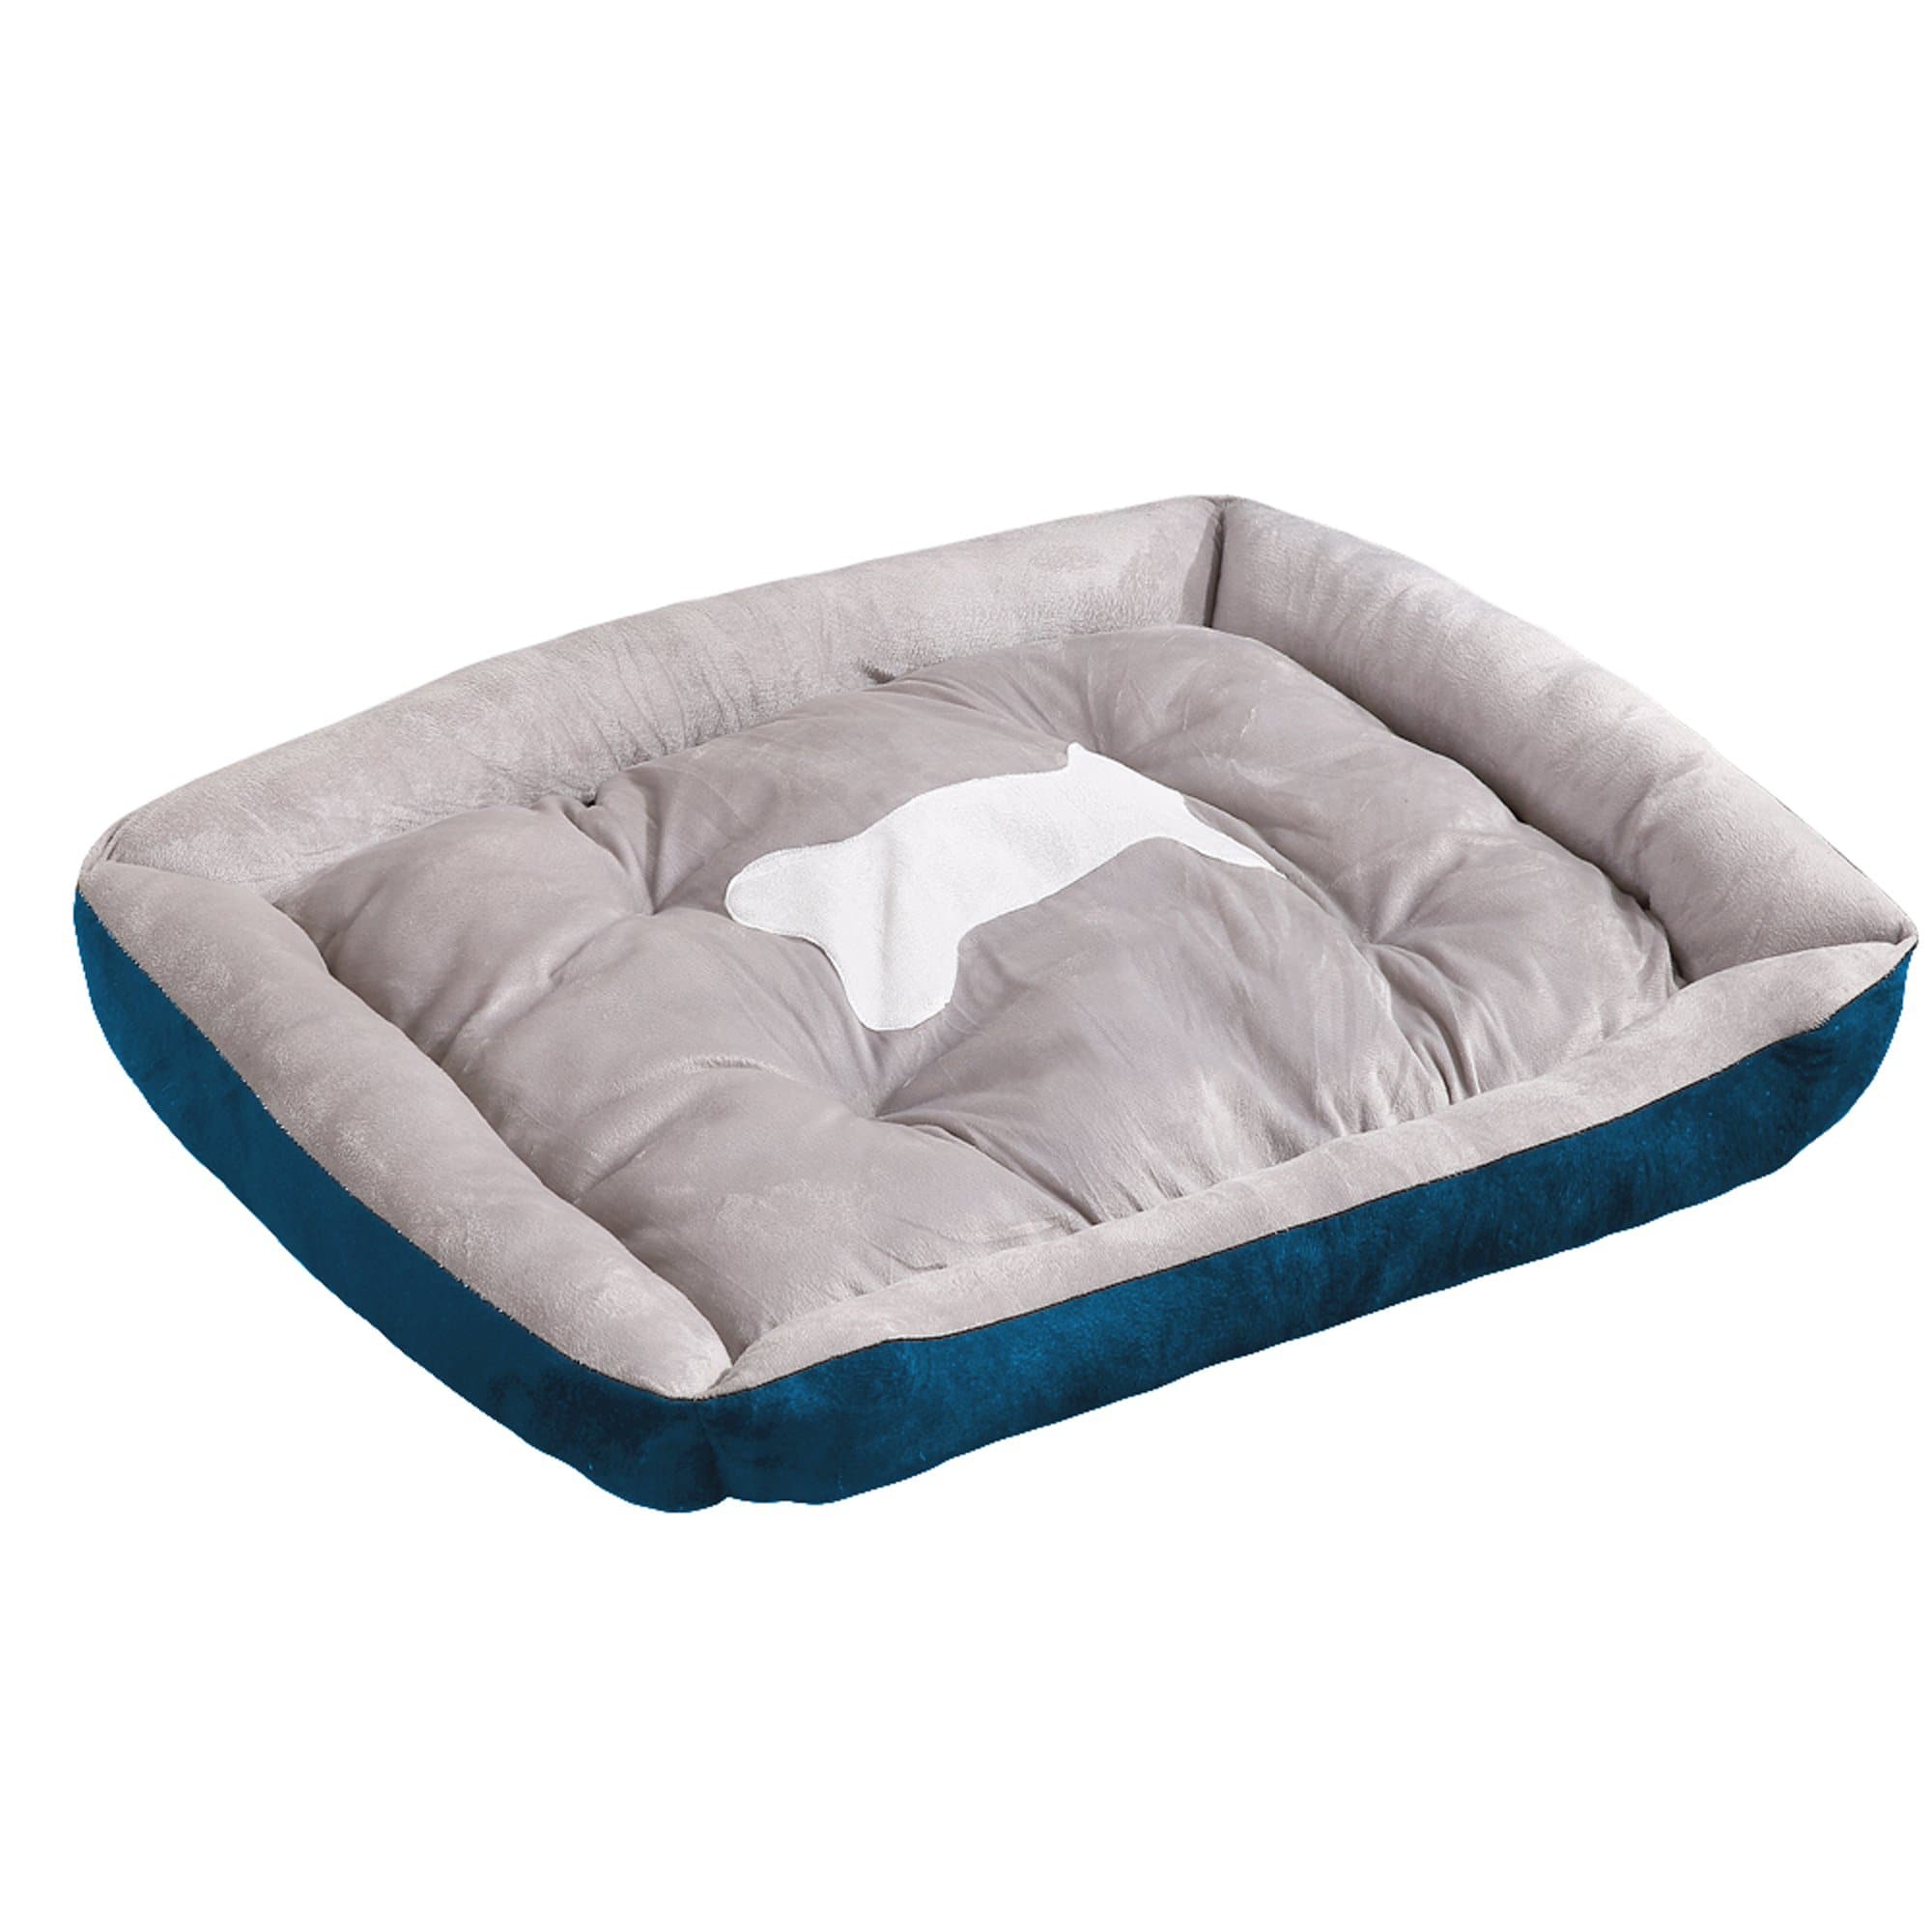 pet products Pet Bed Dog Beds Bedding Mattress Mat Cushion Soft Pad Pads Mats M Navy